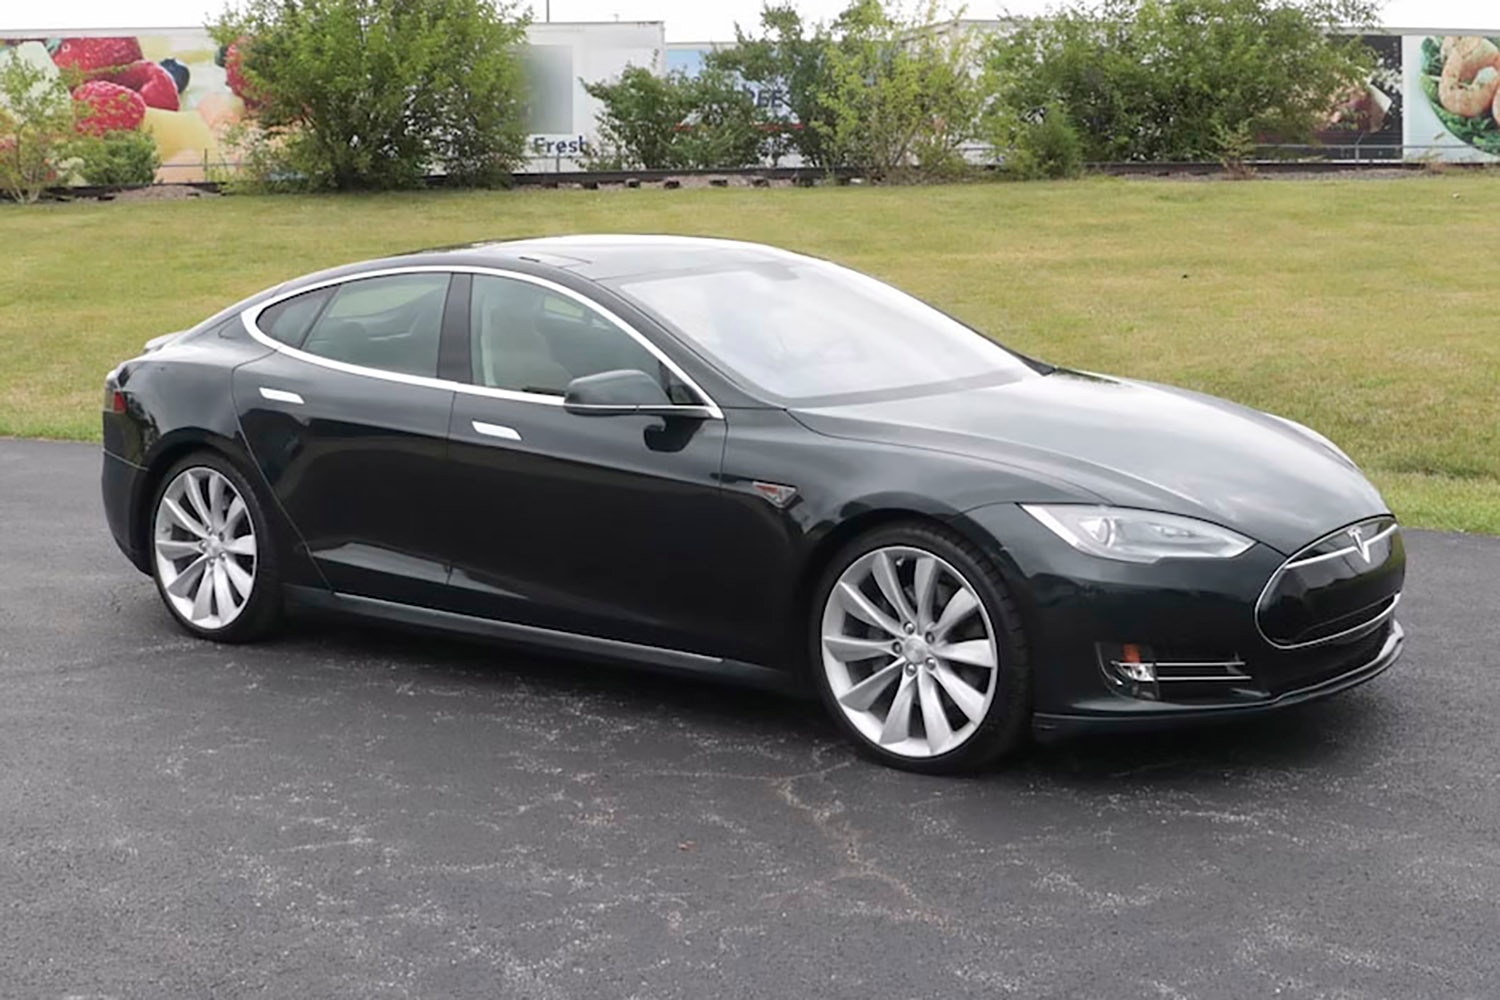 Dark Green Tesla Model S owned by Jack White